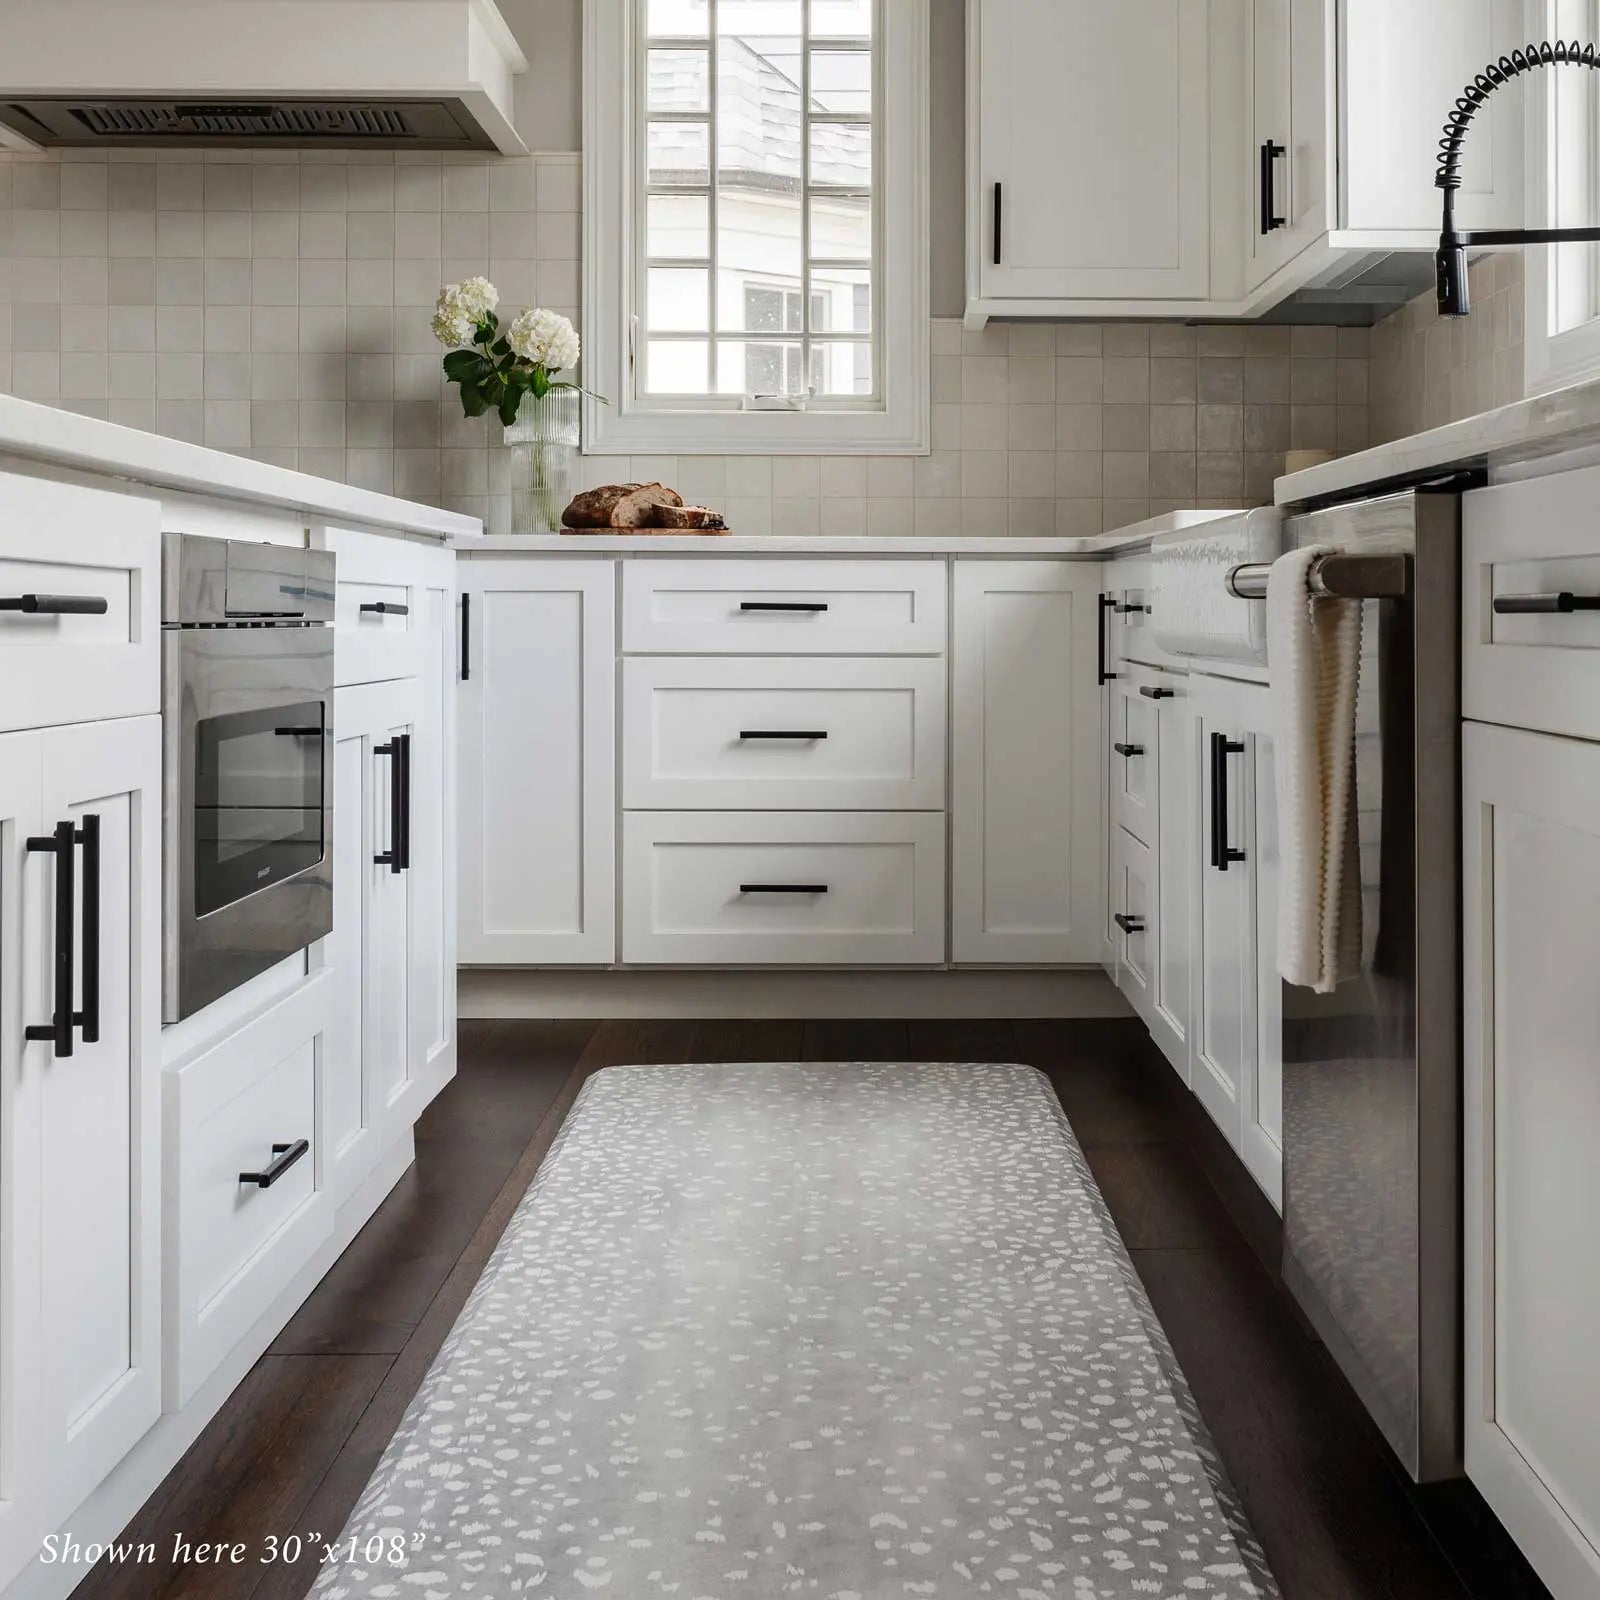 Fawn silver gray animal print kitchen mat shown kitchen in size 30x108